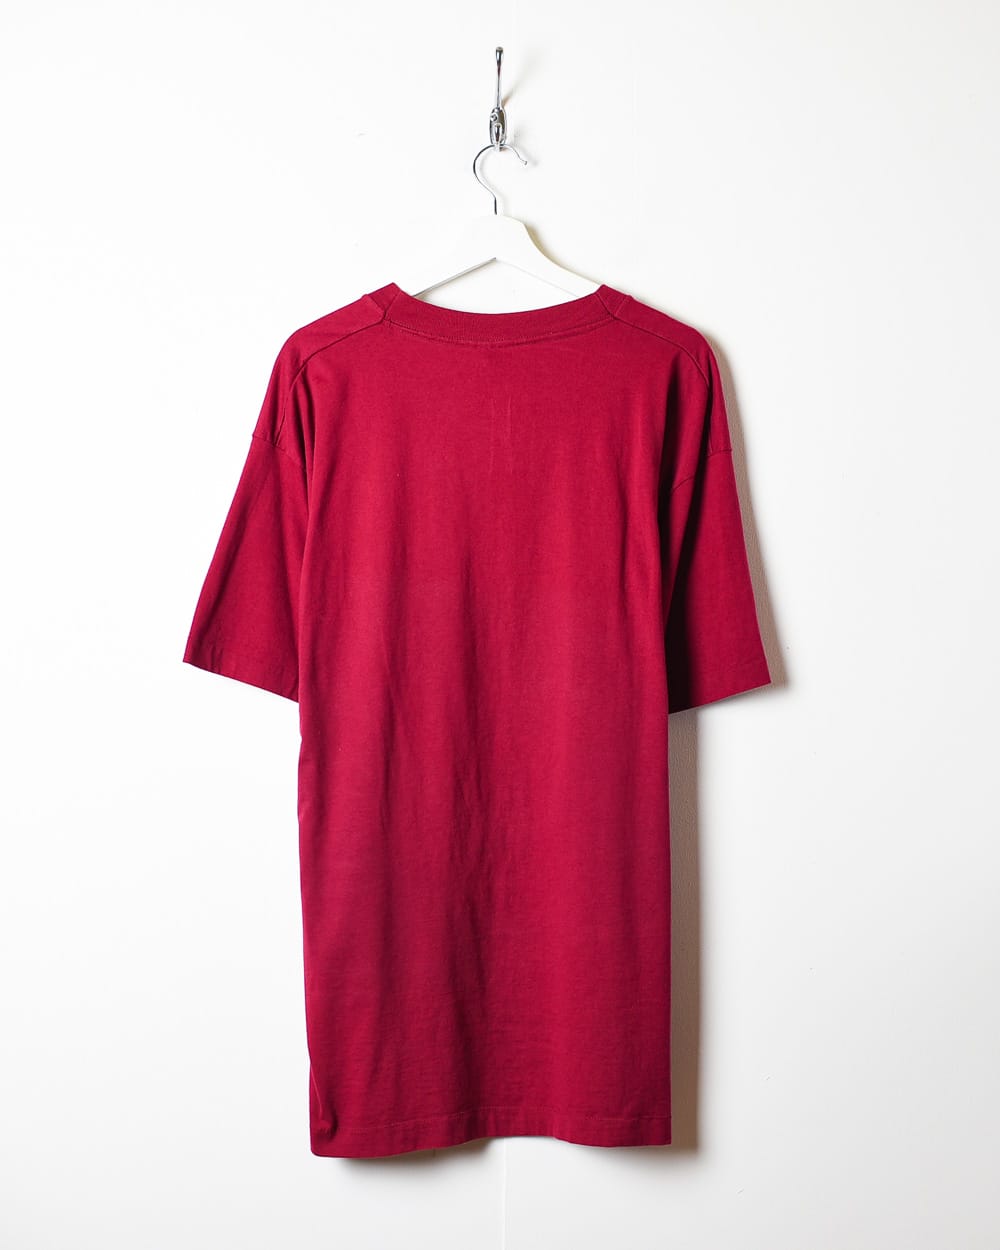 Maroon Central State University Alumni Single Stitch T-Shirt - XX-Large